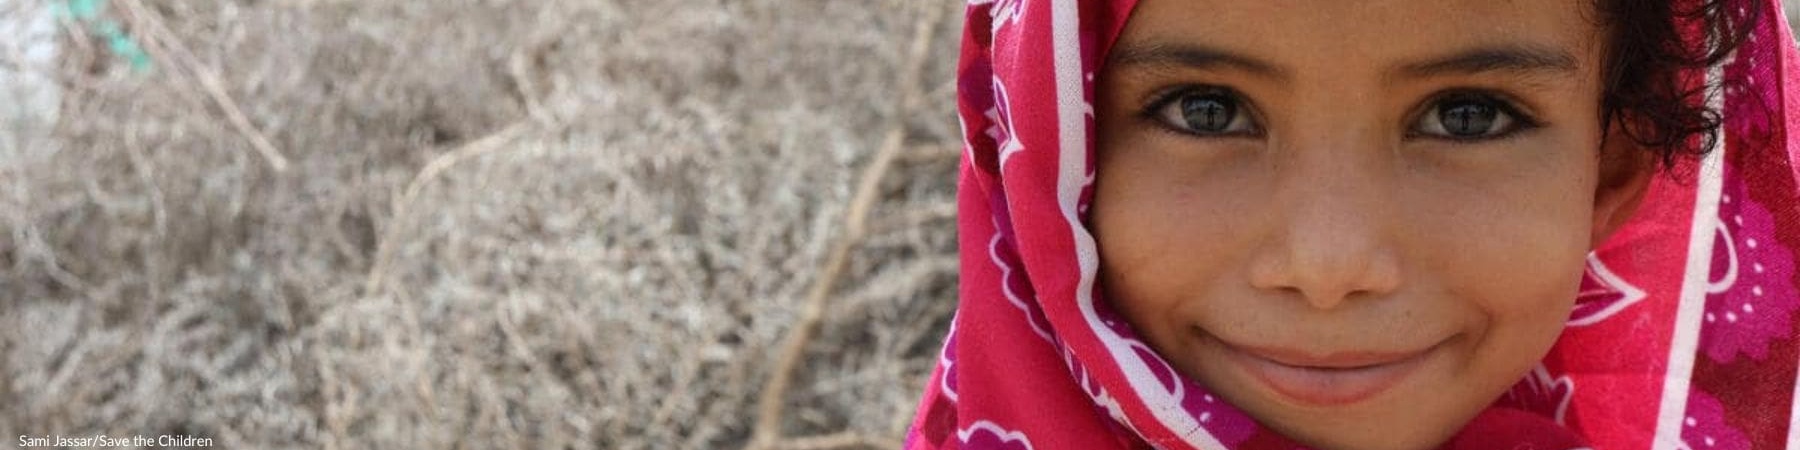 bambina in yemen sorridente con velo fucsia in testa